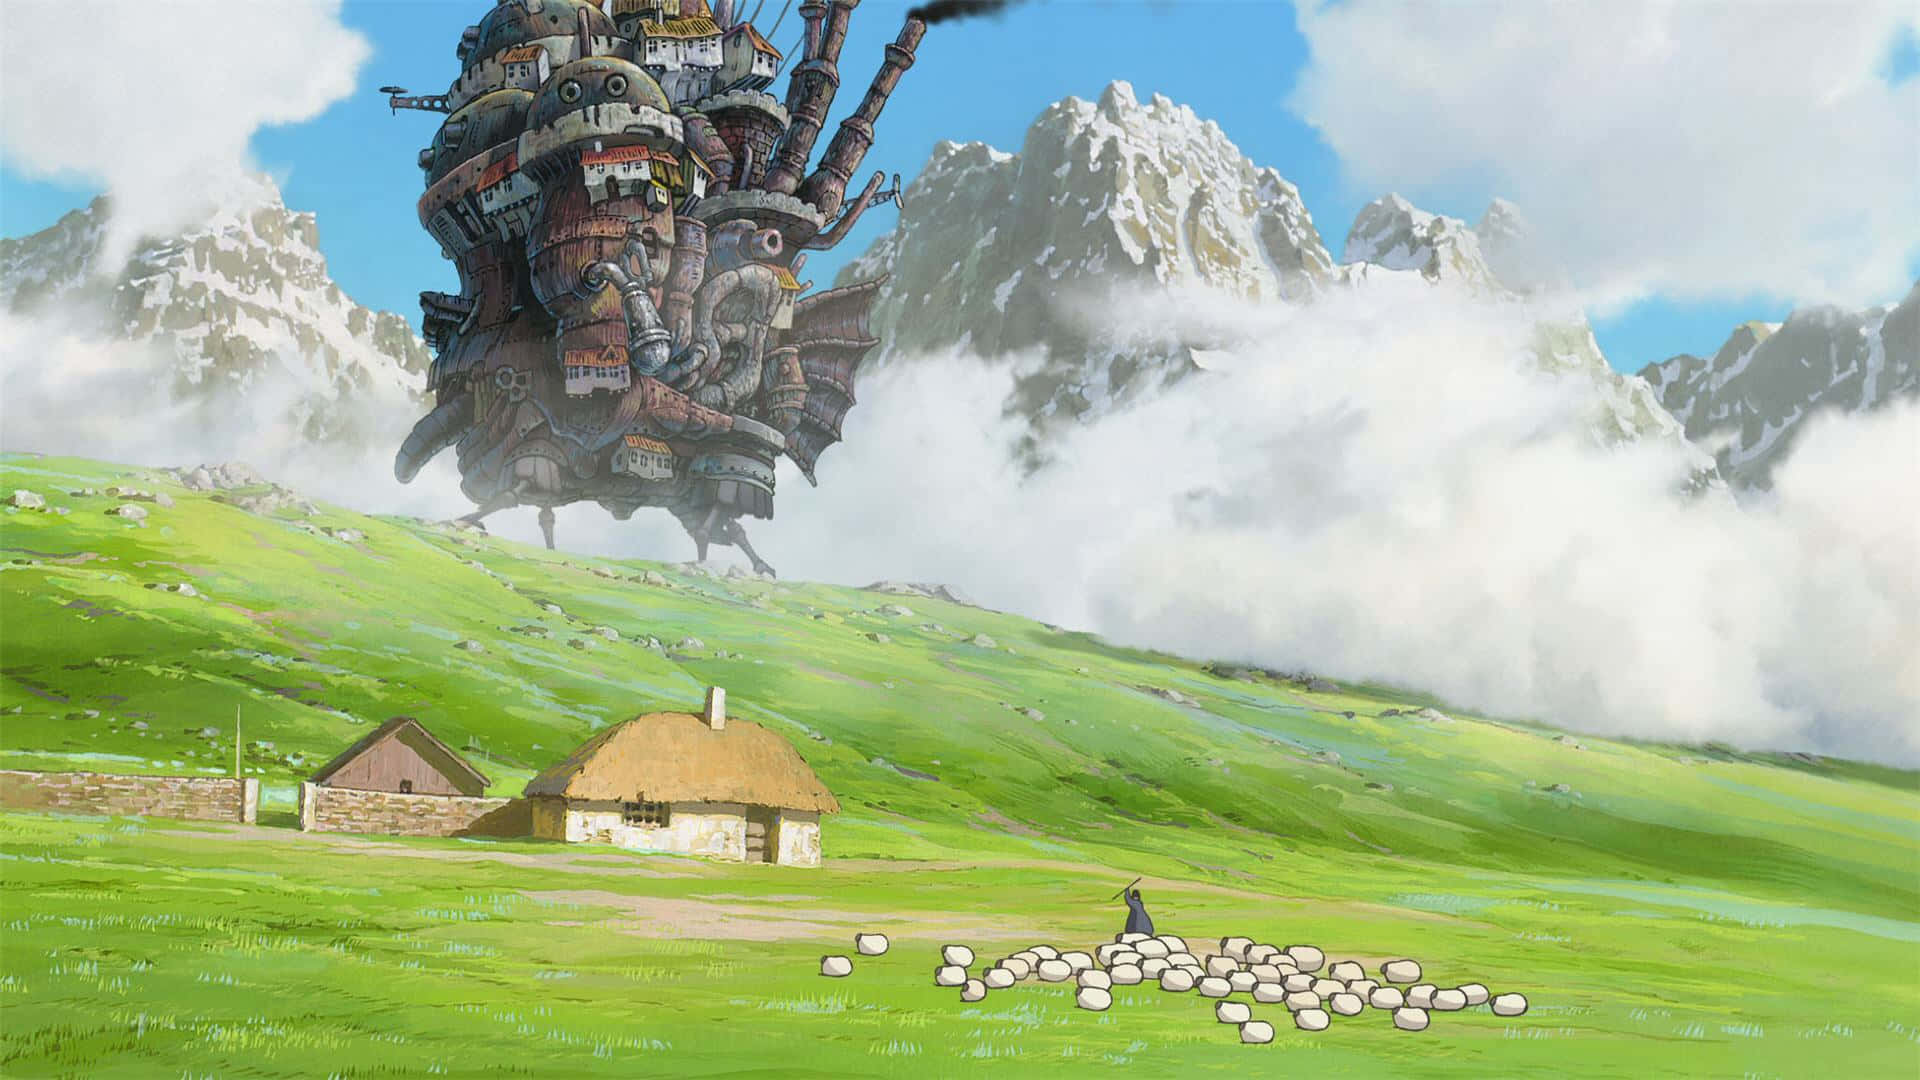 A fascinating Studio Ghibli landscape scene